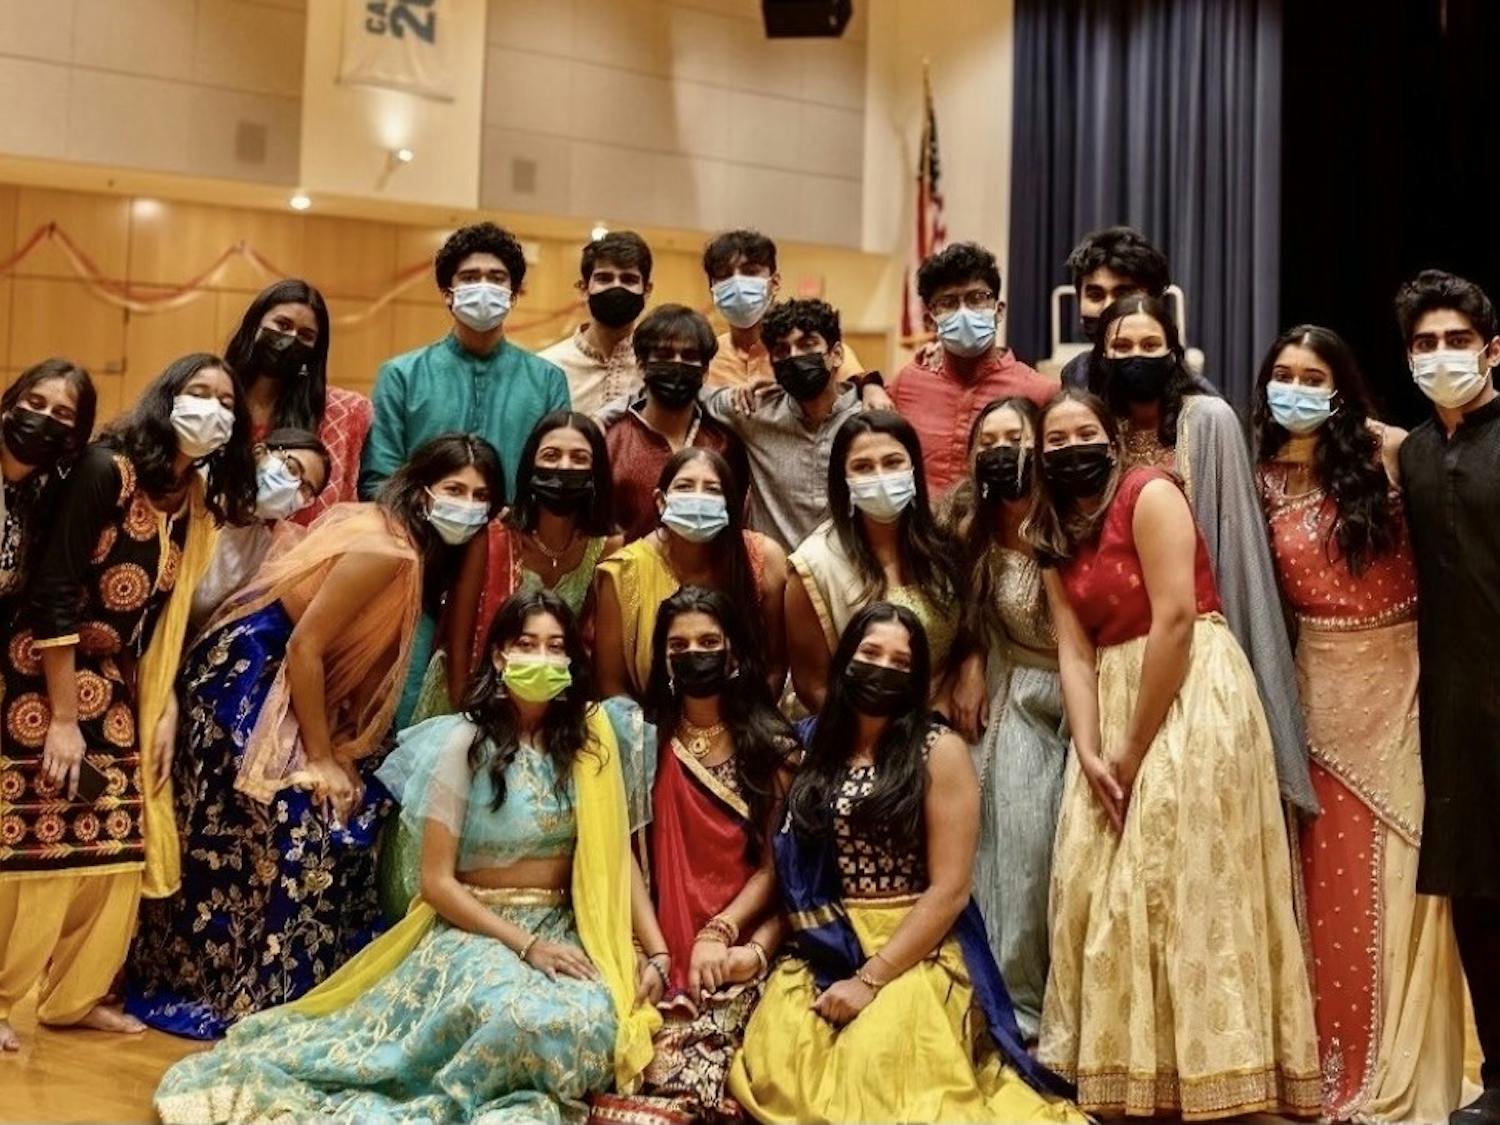 The Sangam organization highlights South Asian culture on campus. Photo courtesy of Sarita Lokesh.